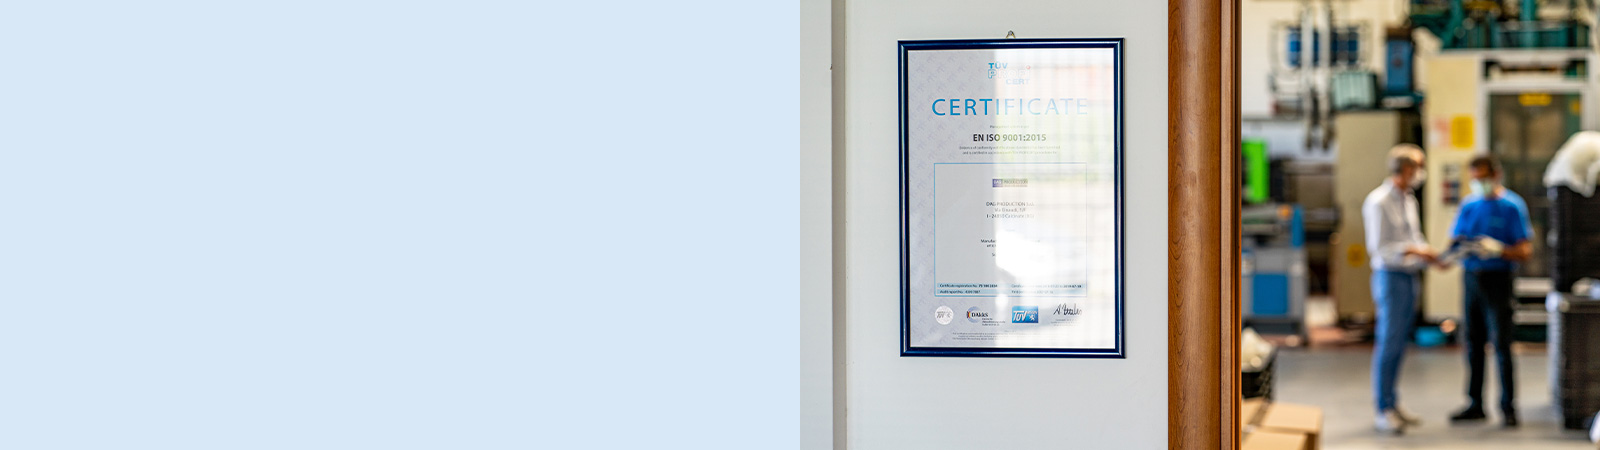 Certificazione EN ISO 9001:2015